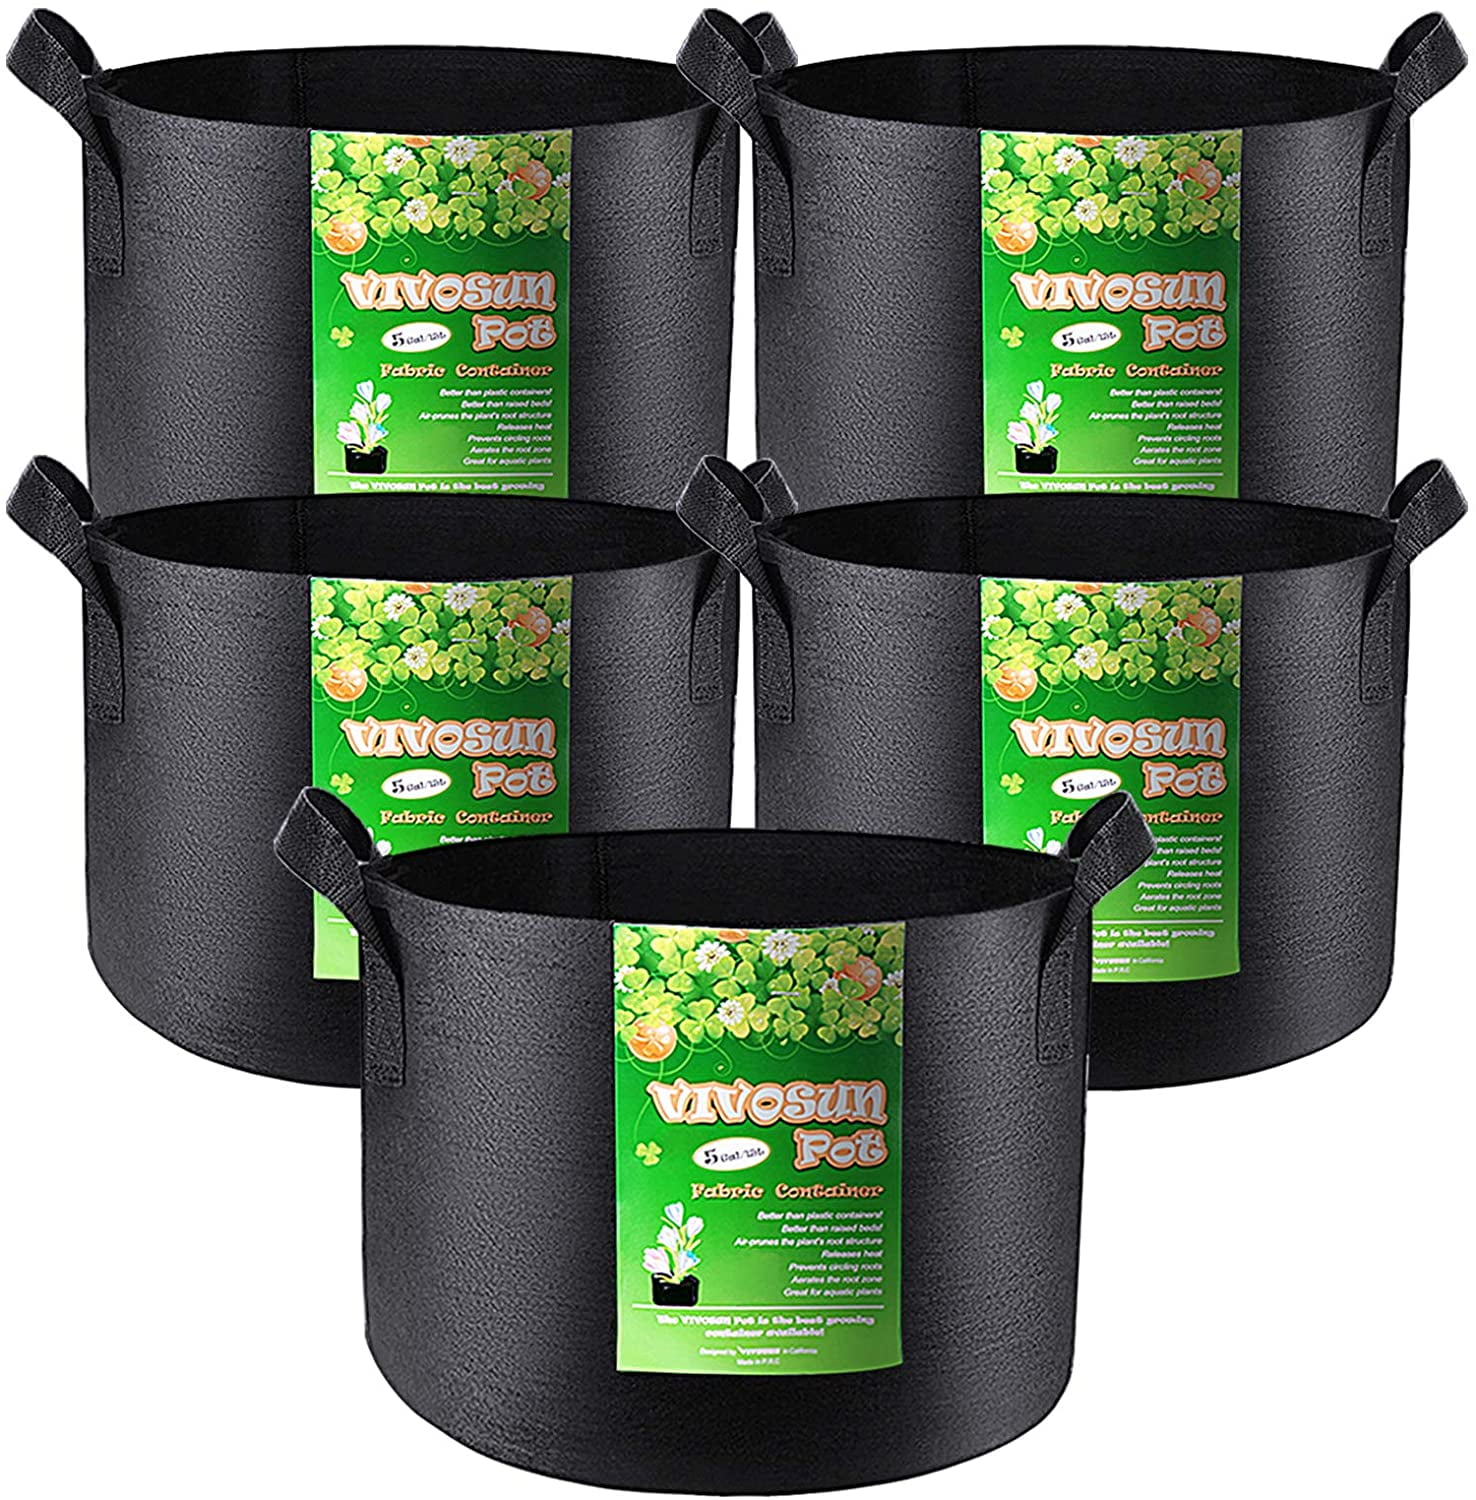 DYNOMYCO 5 Gallon Plant Grow Bags (Six Pack)